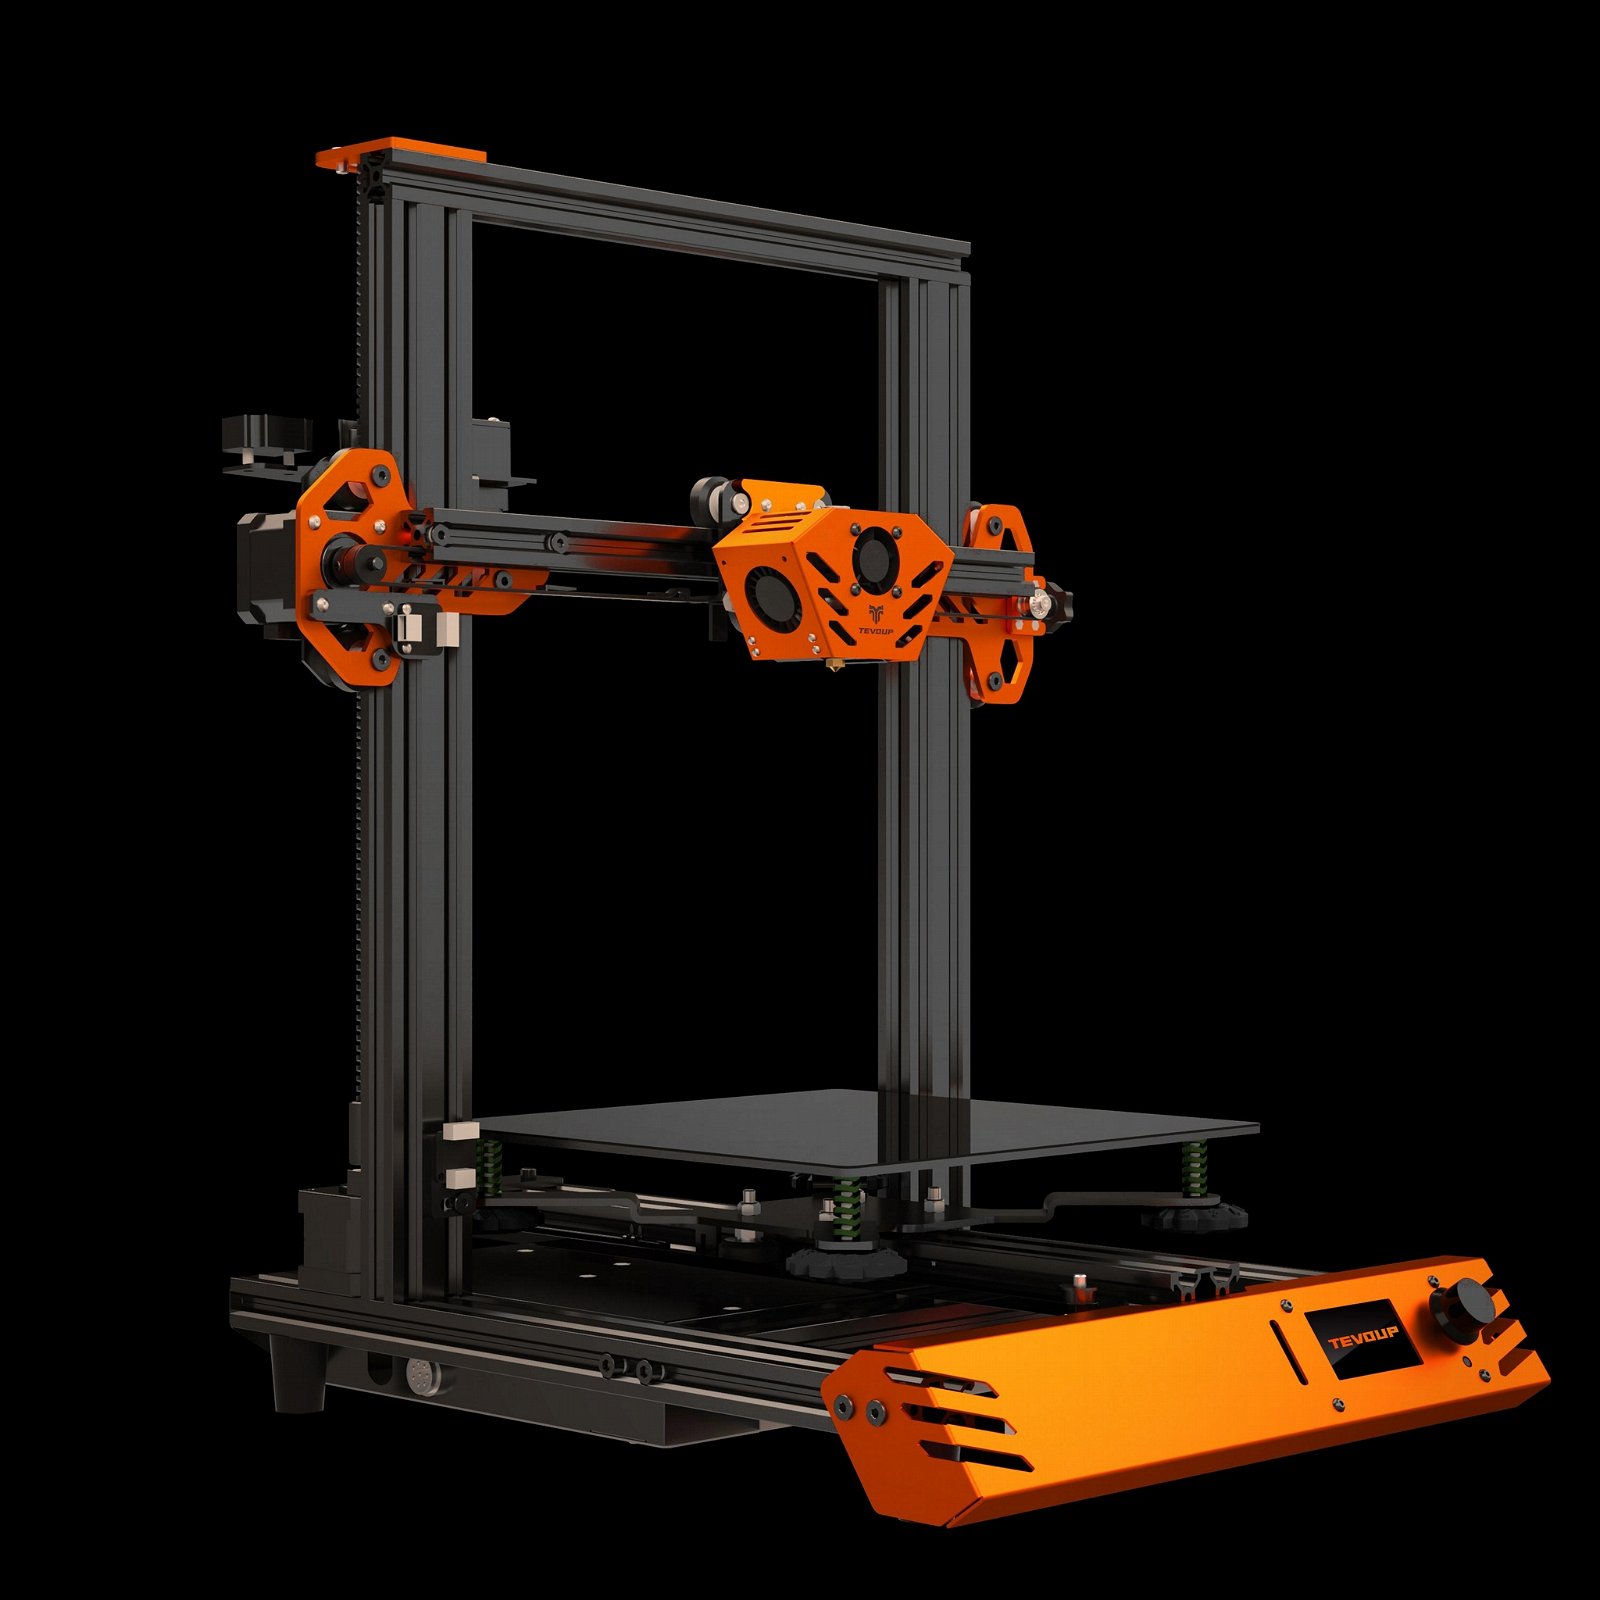 TEVOUP TARANTULA PRO 3D PRINTER,Upgrade High Printing Speed FDM 3D PRINTER KIT 5